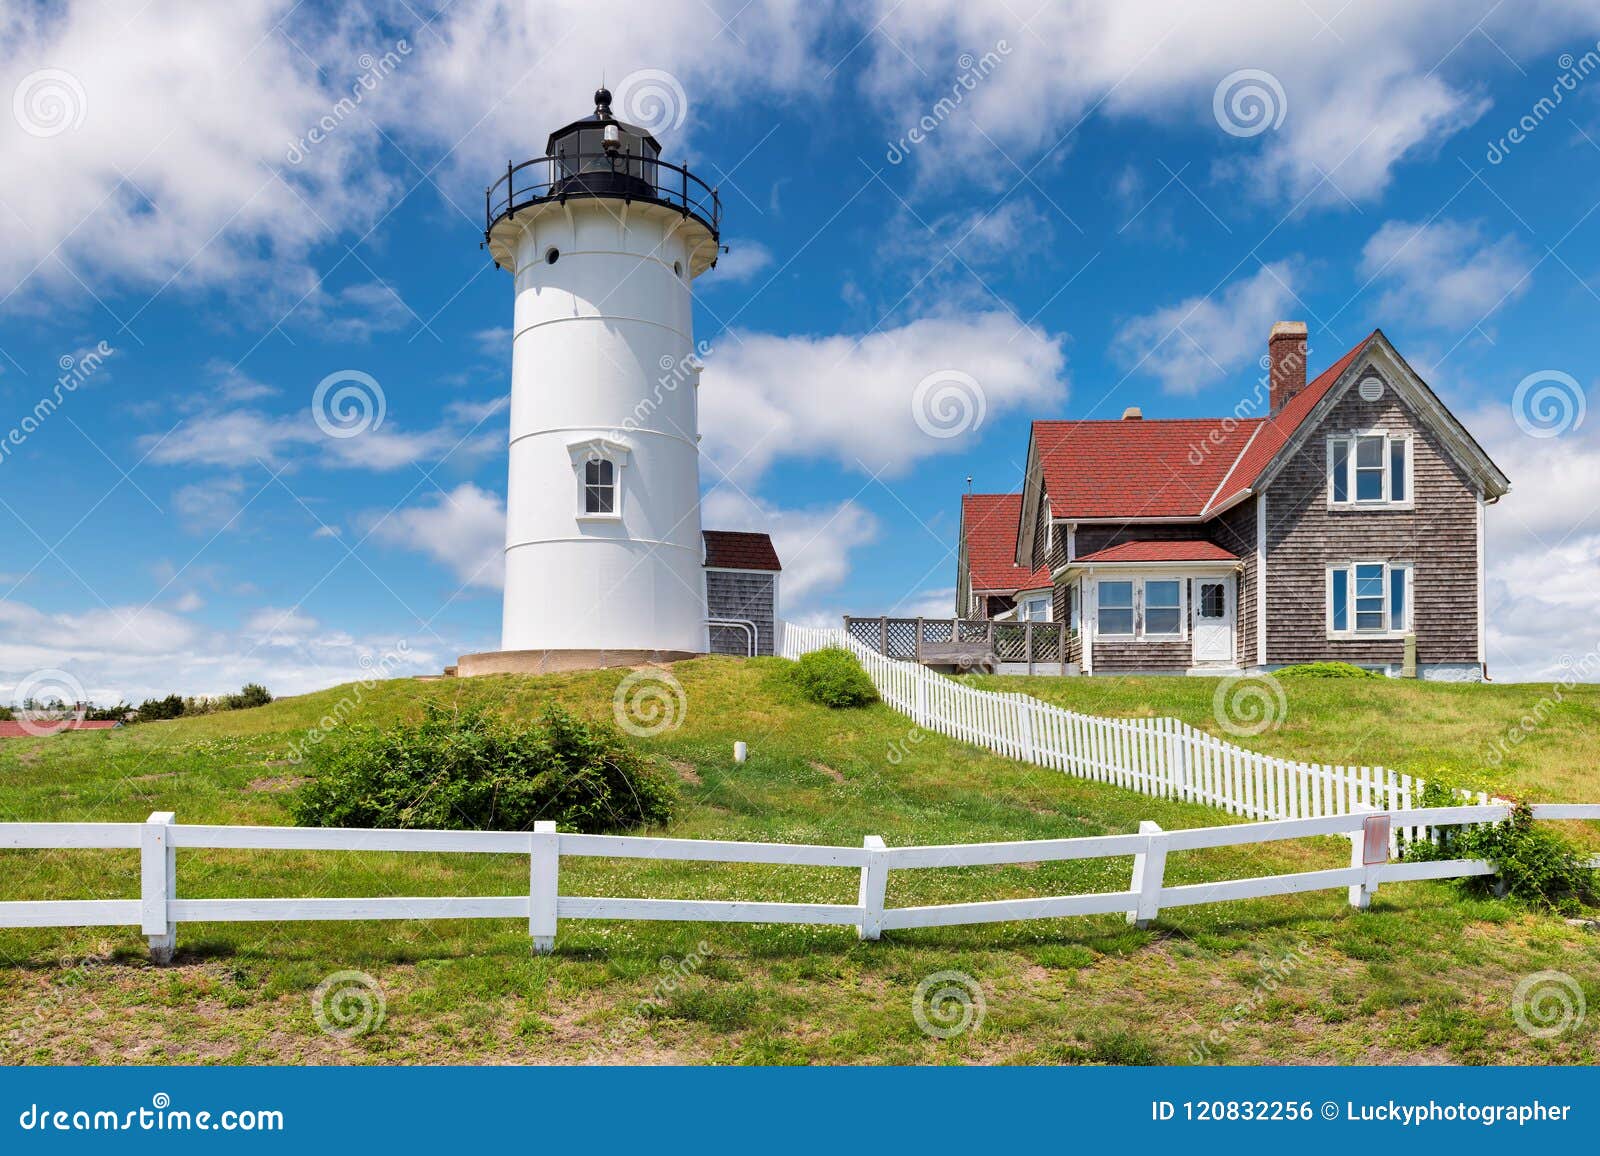 cape cod lighthouse, massachusetts